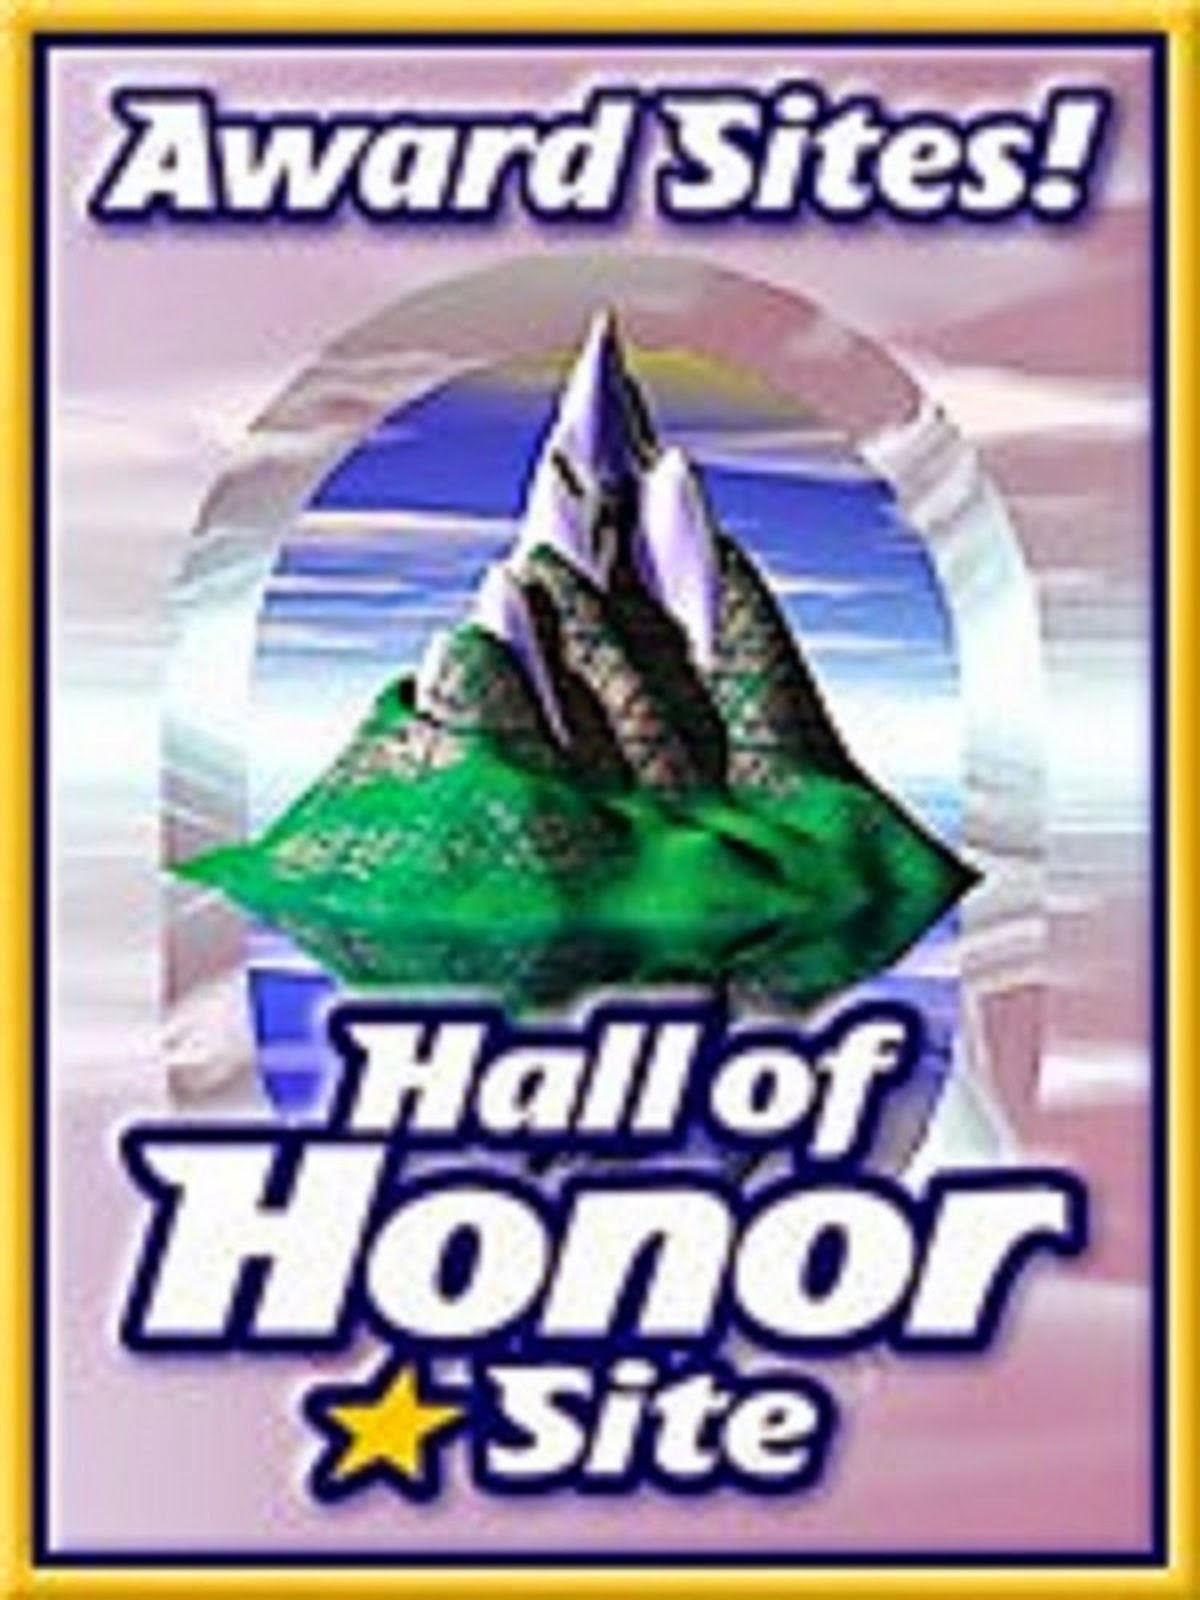 HALL OF HONOR AWARD SITE